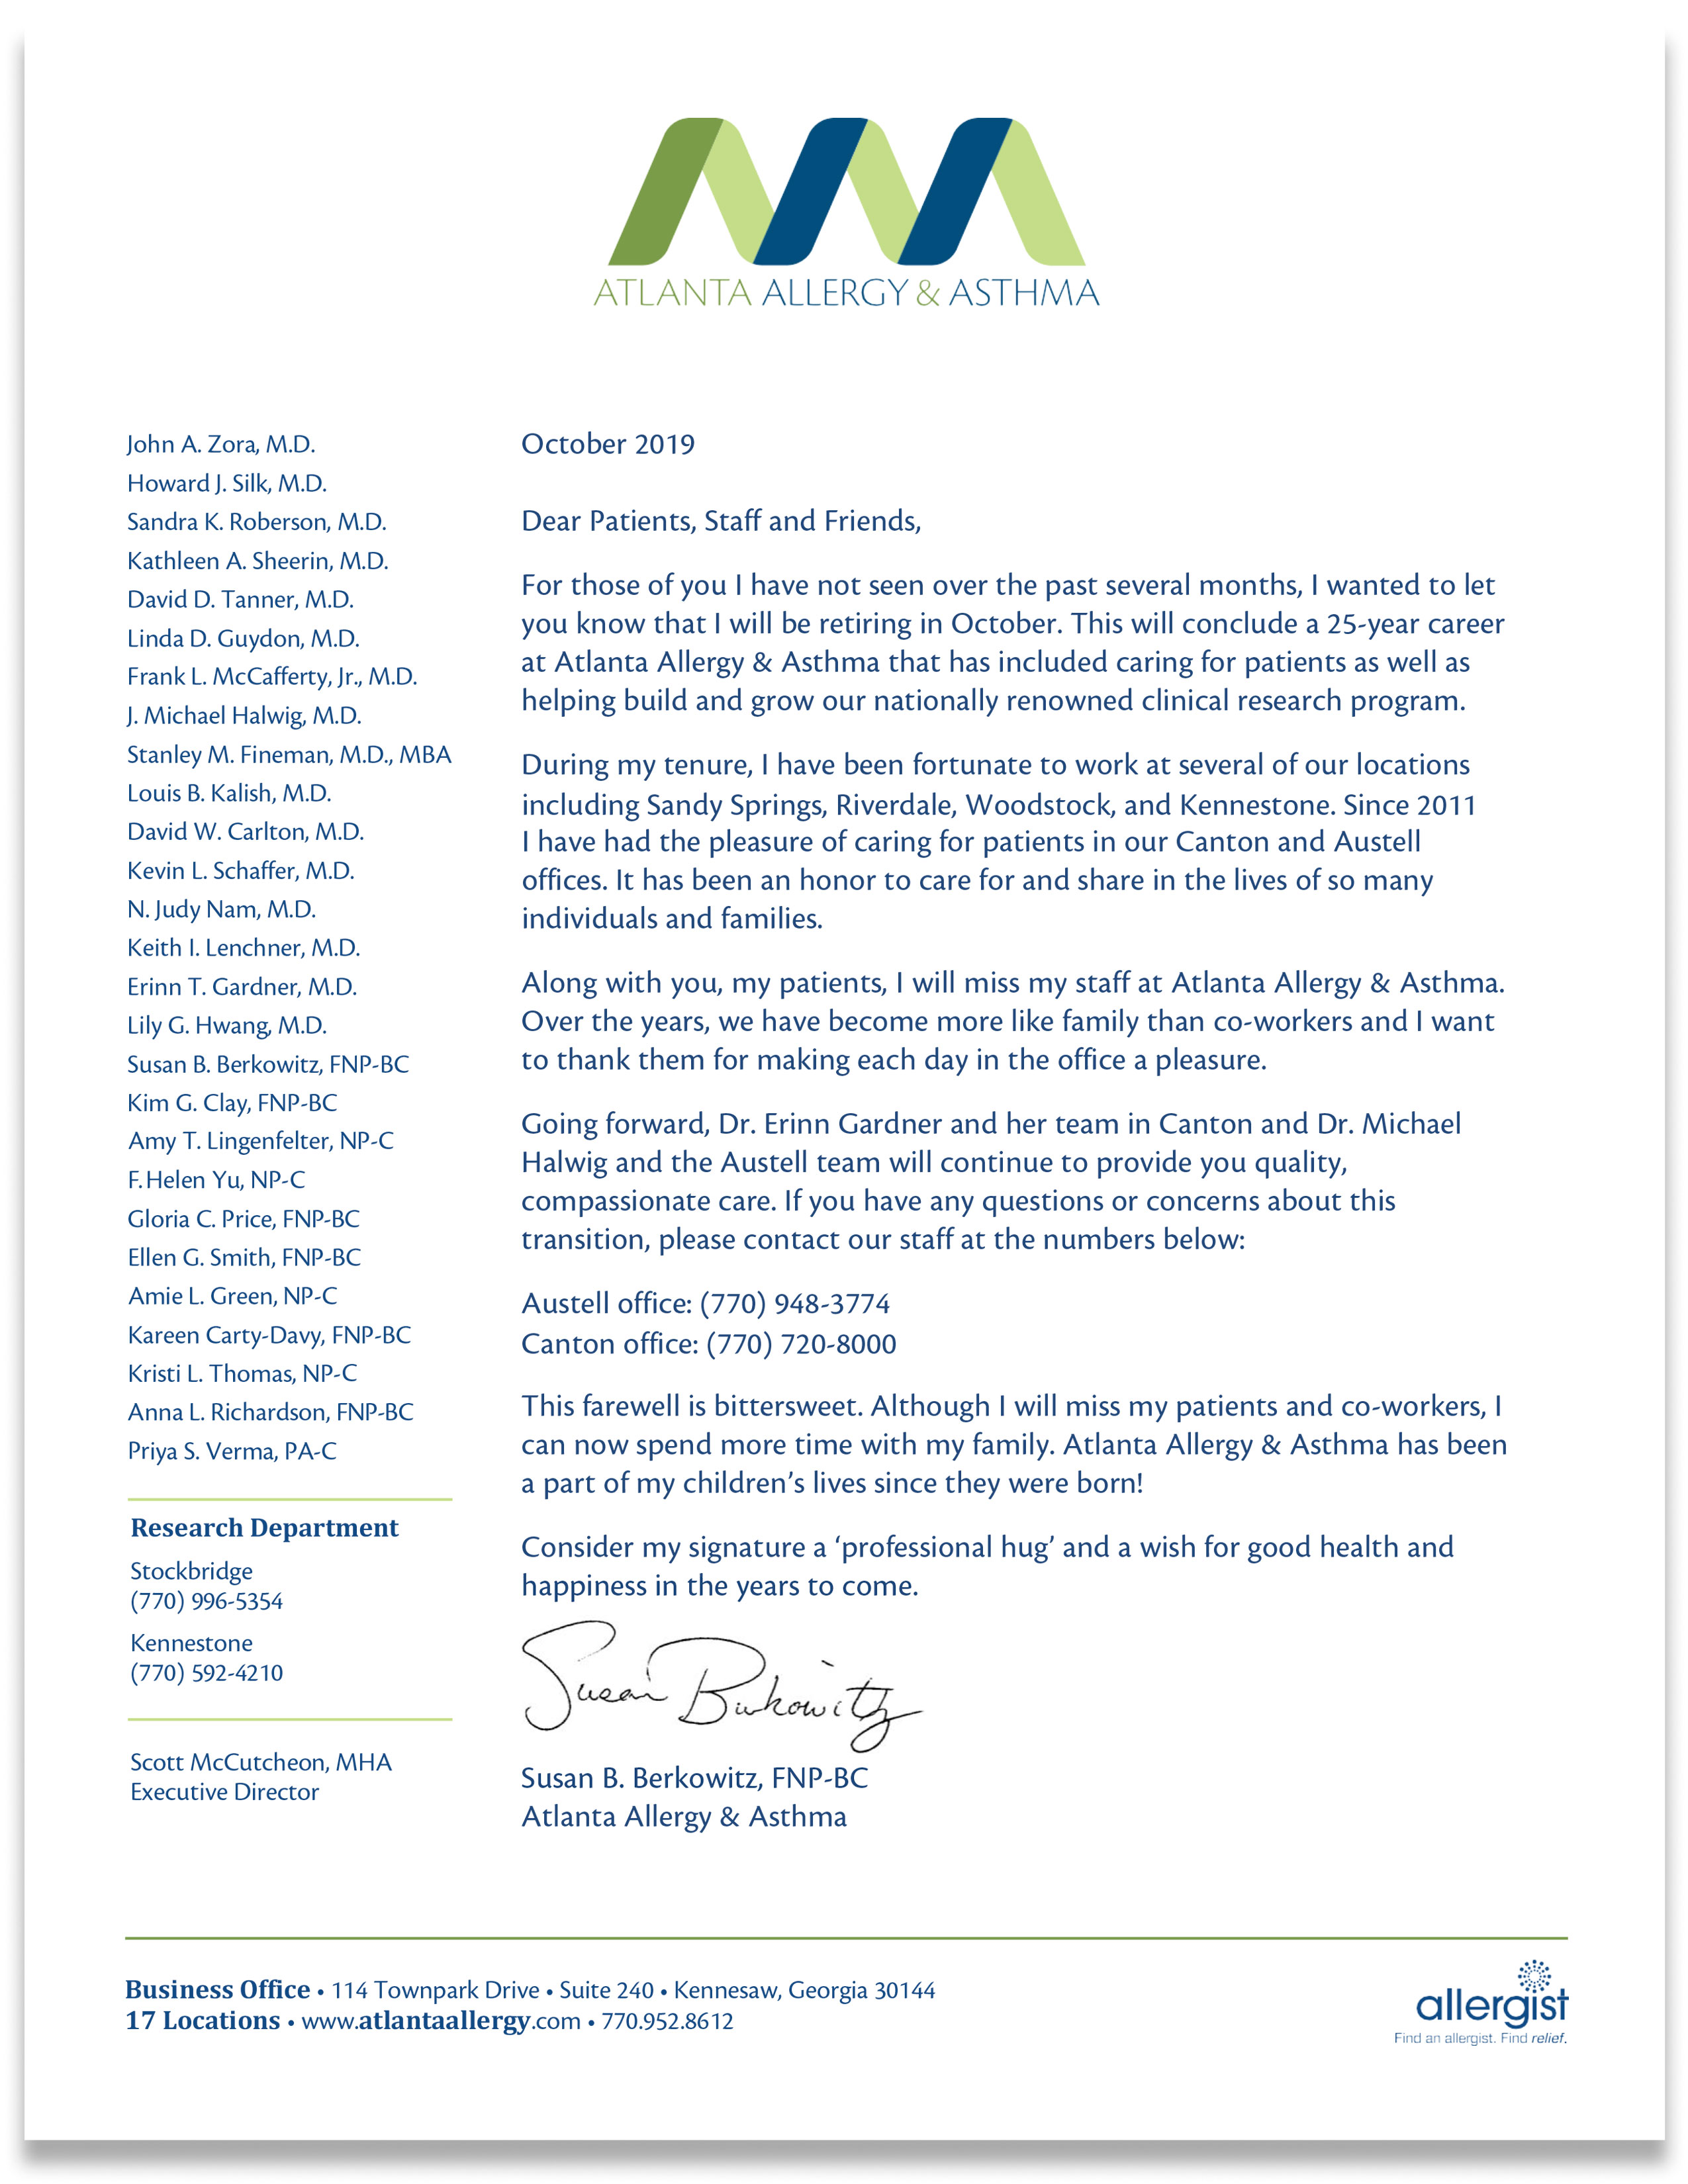 Letter from Susan B. Berkowitz, FNP-BC announcing retirement